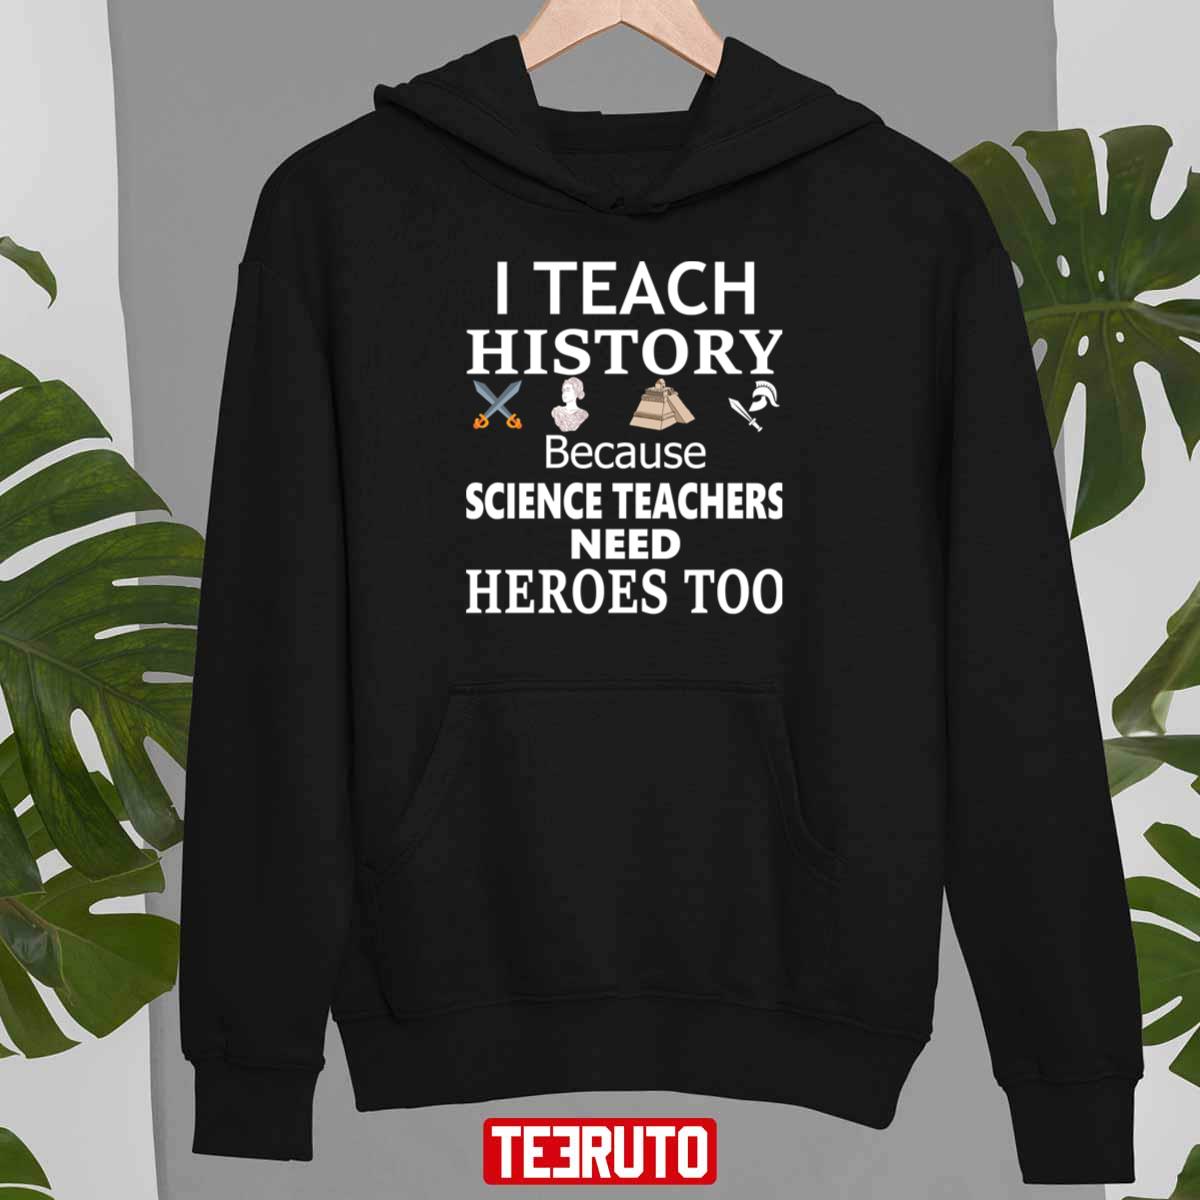 History Teacher I Teach History Because Science Teachers Need Heroes Too Unisex T-Shirt